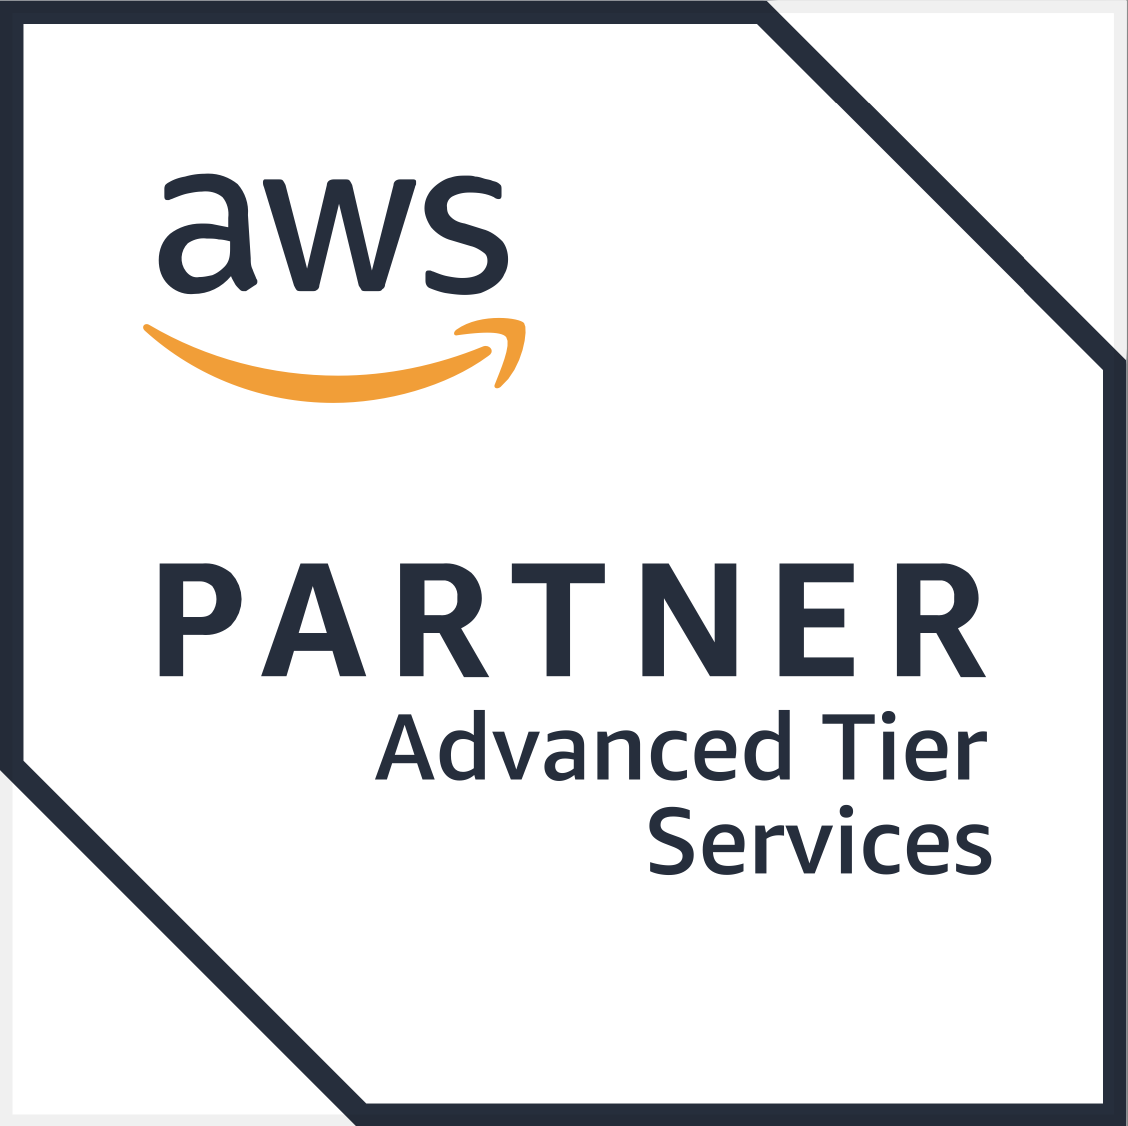 AWS Advanced Tier Services Partner